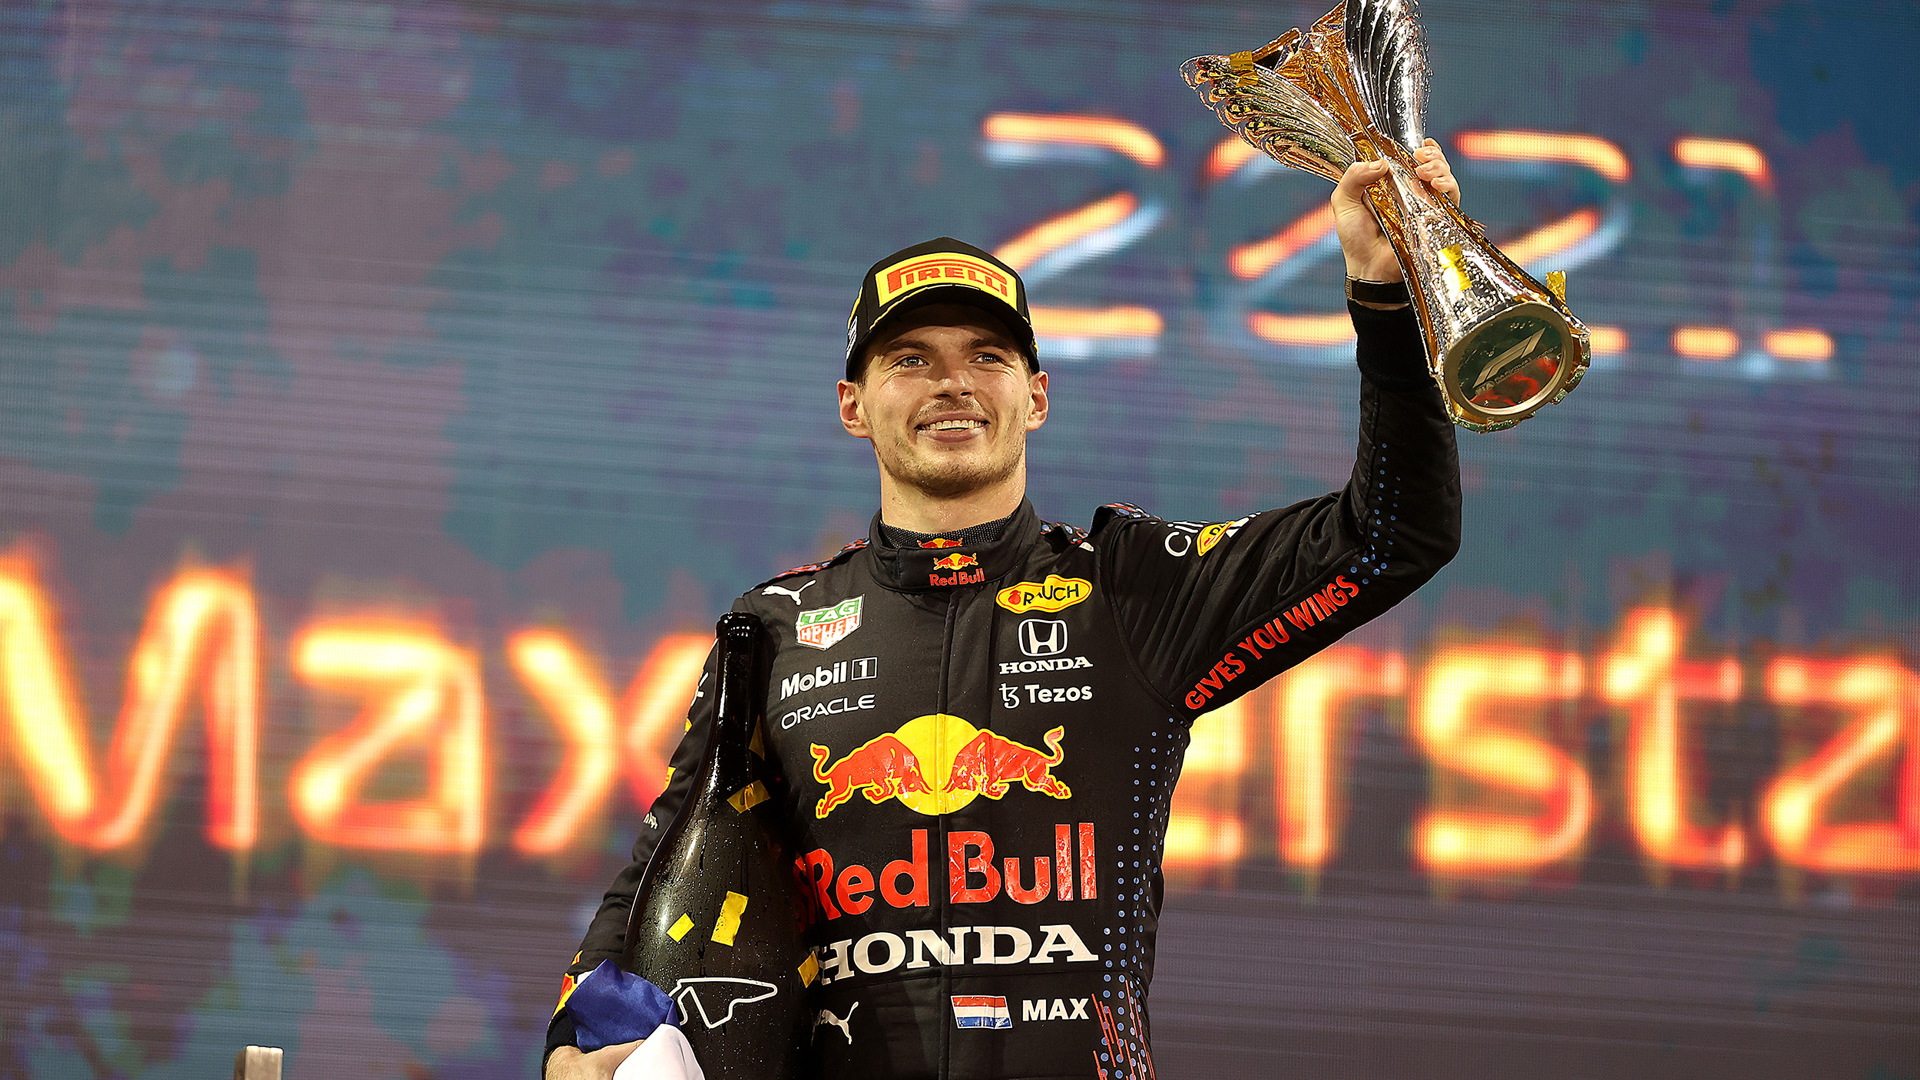 Red Bull Racing's Max Verstappen at the 2021 Formula One Abu Dhabi Grand Prix